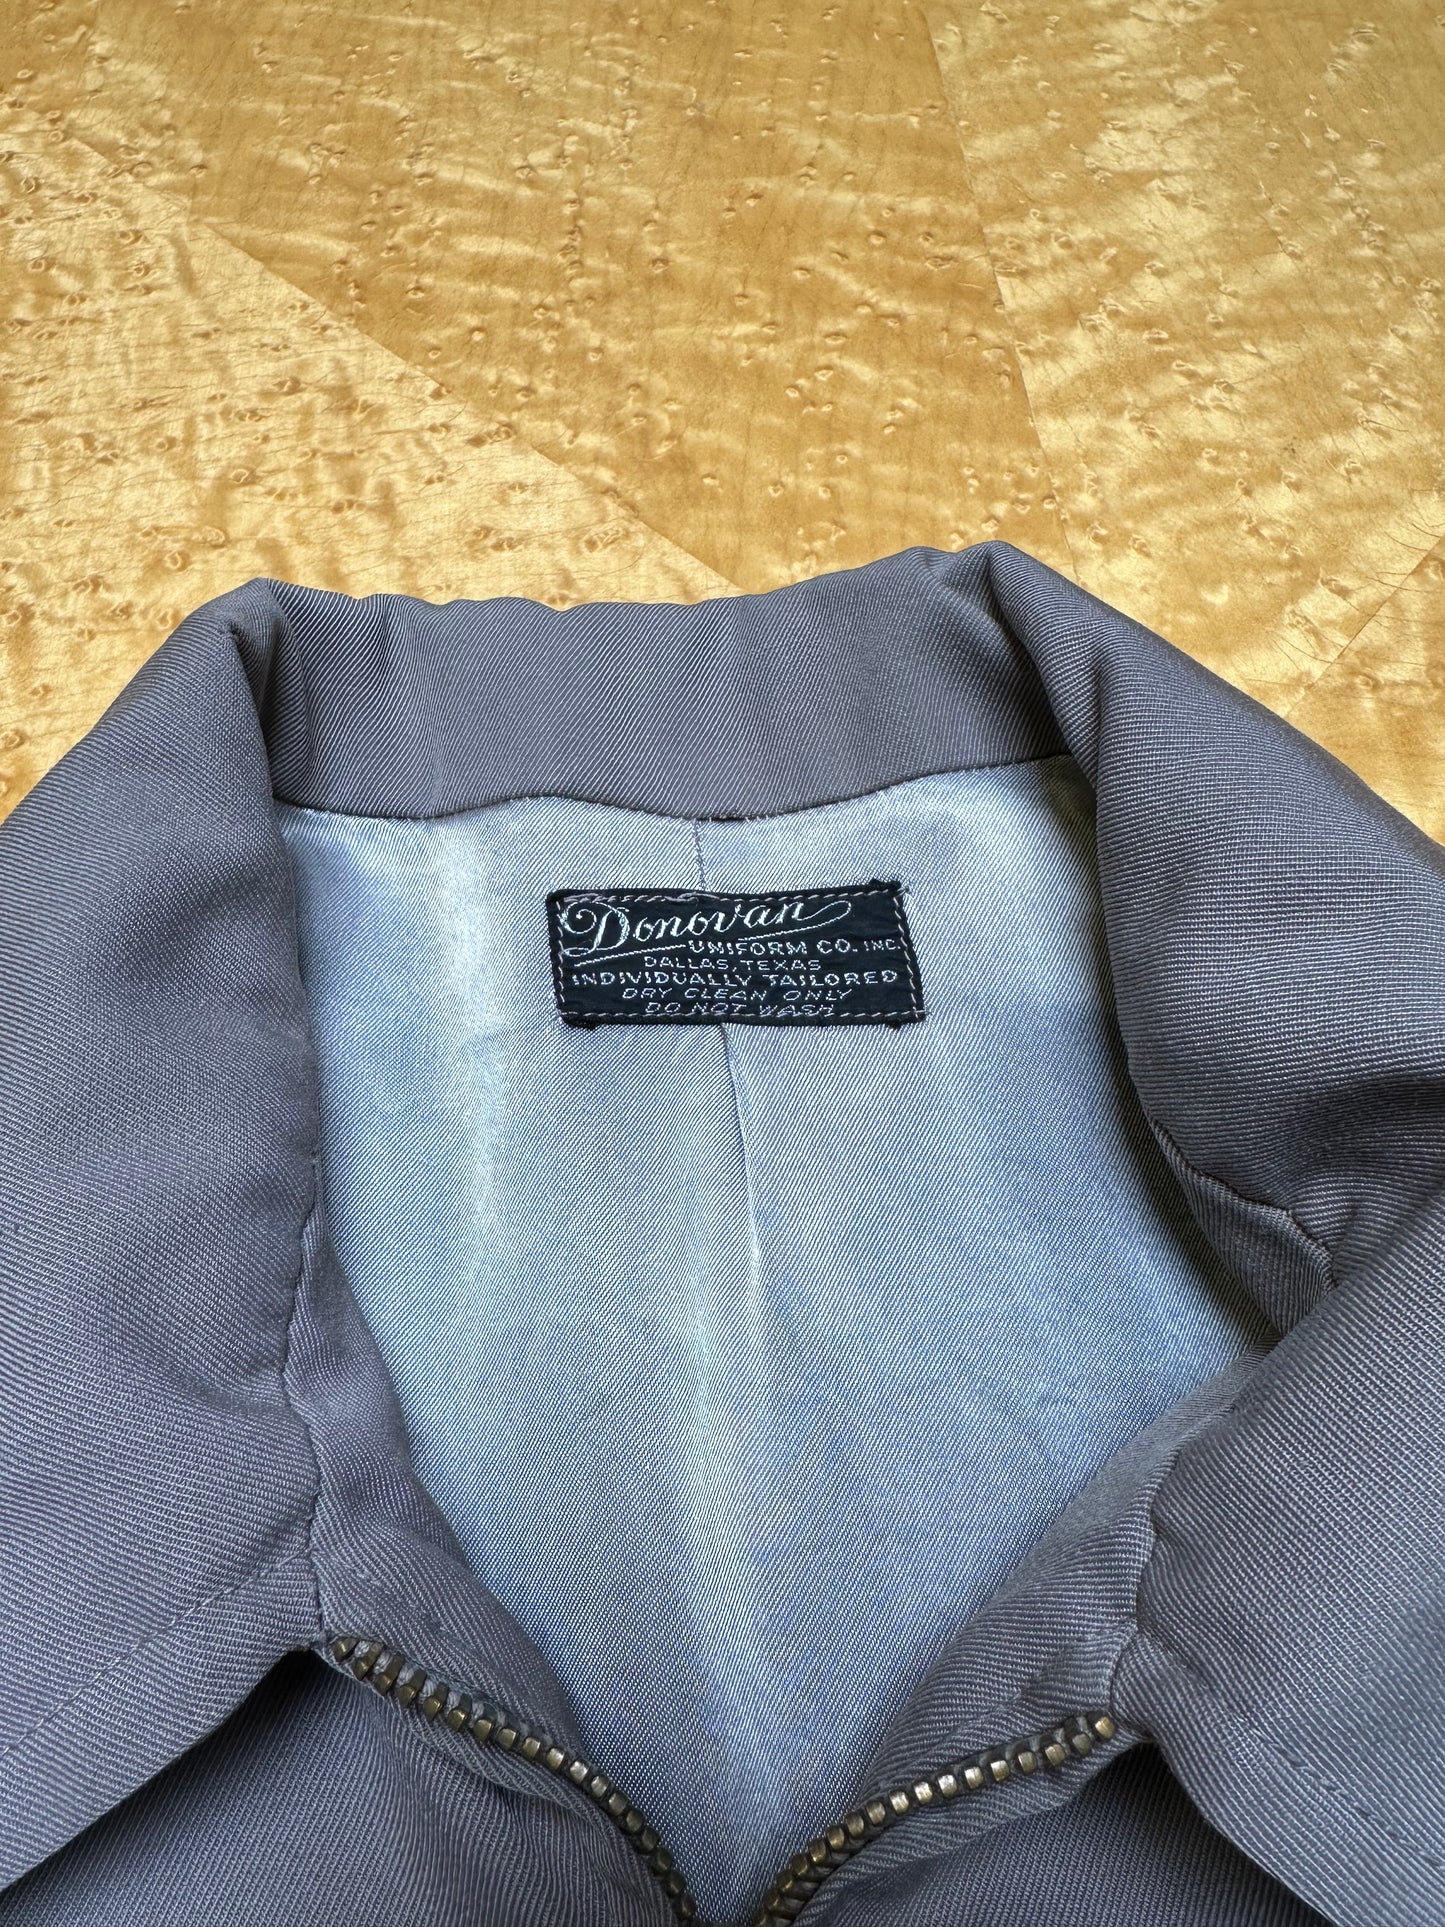 Donovan Lined Work Jacket 1950s